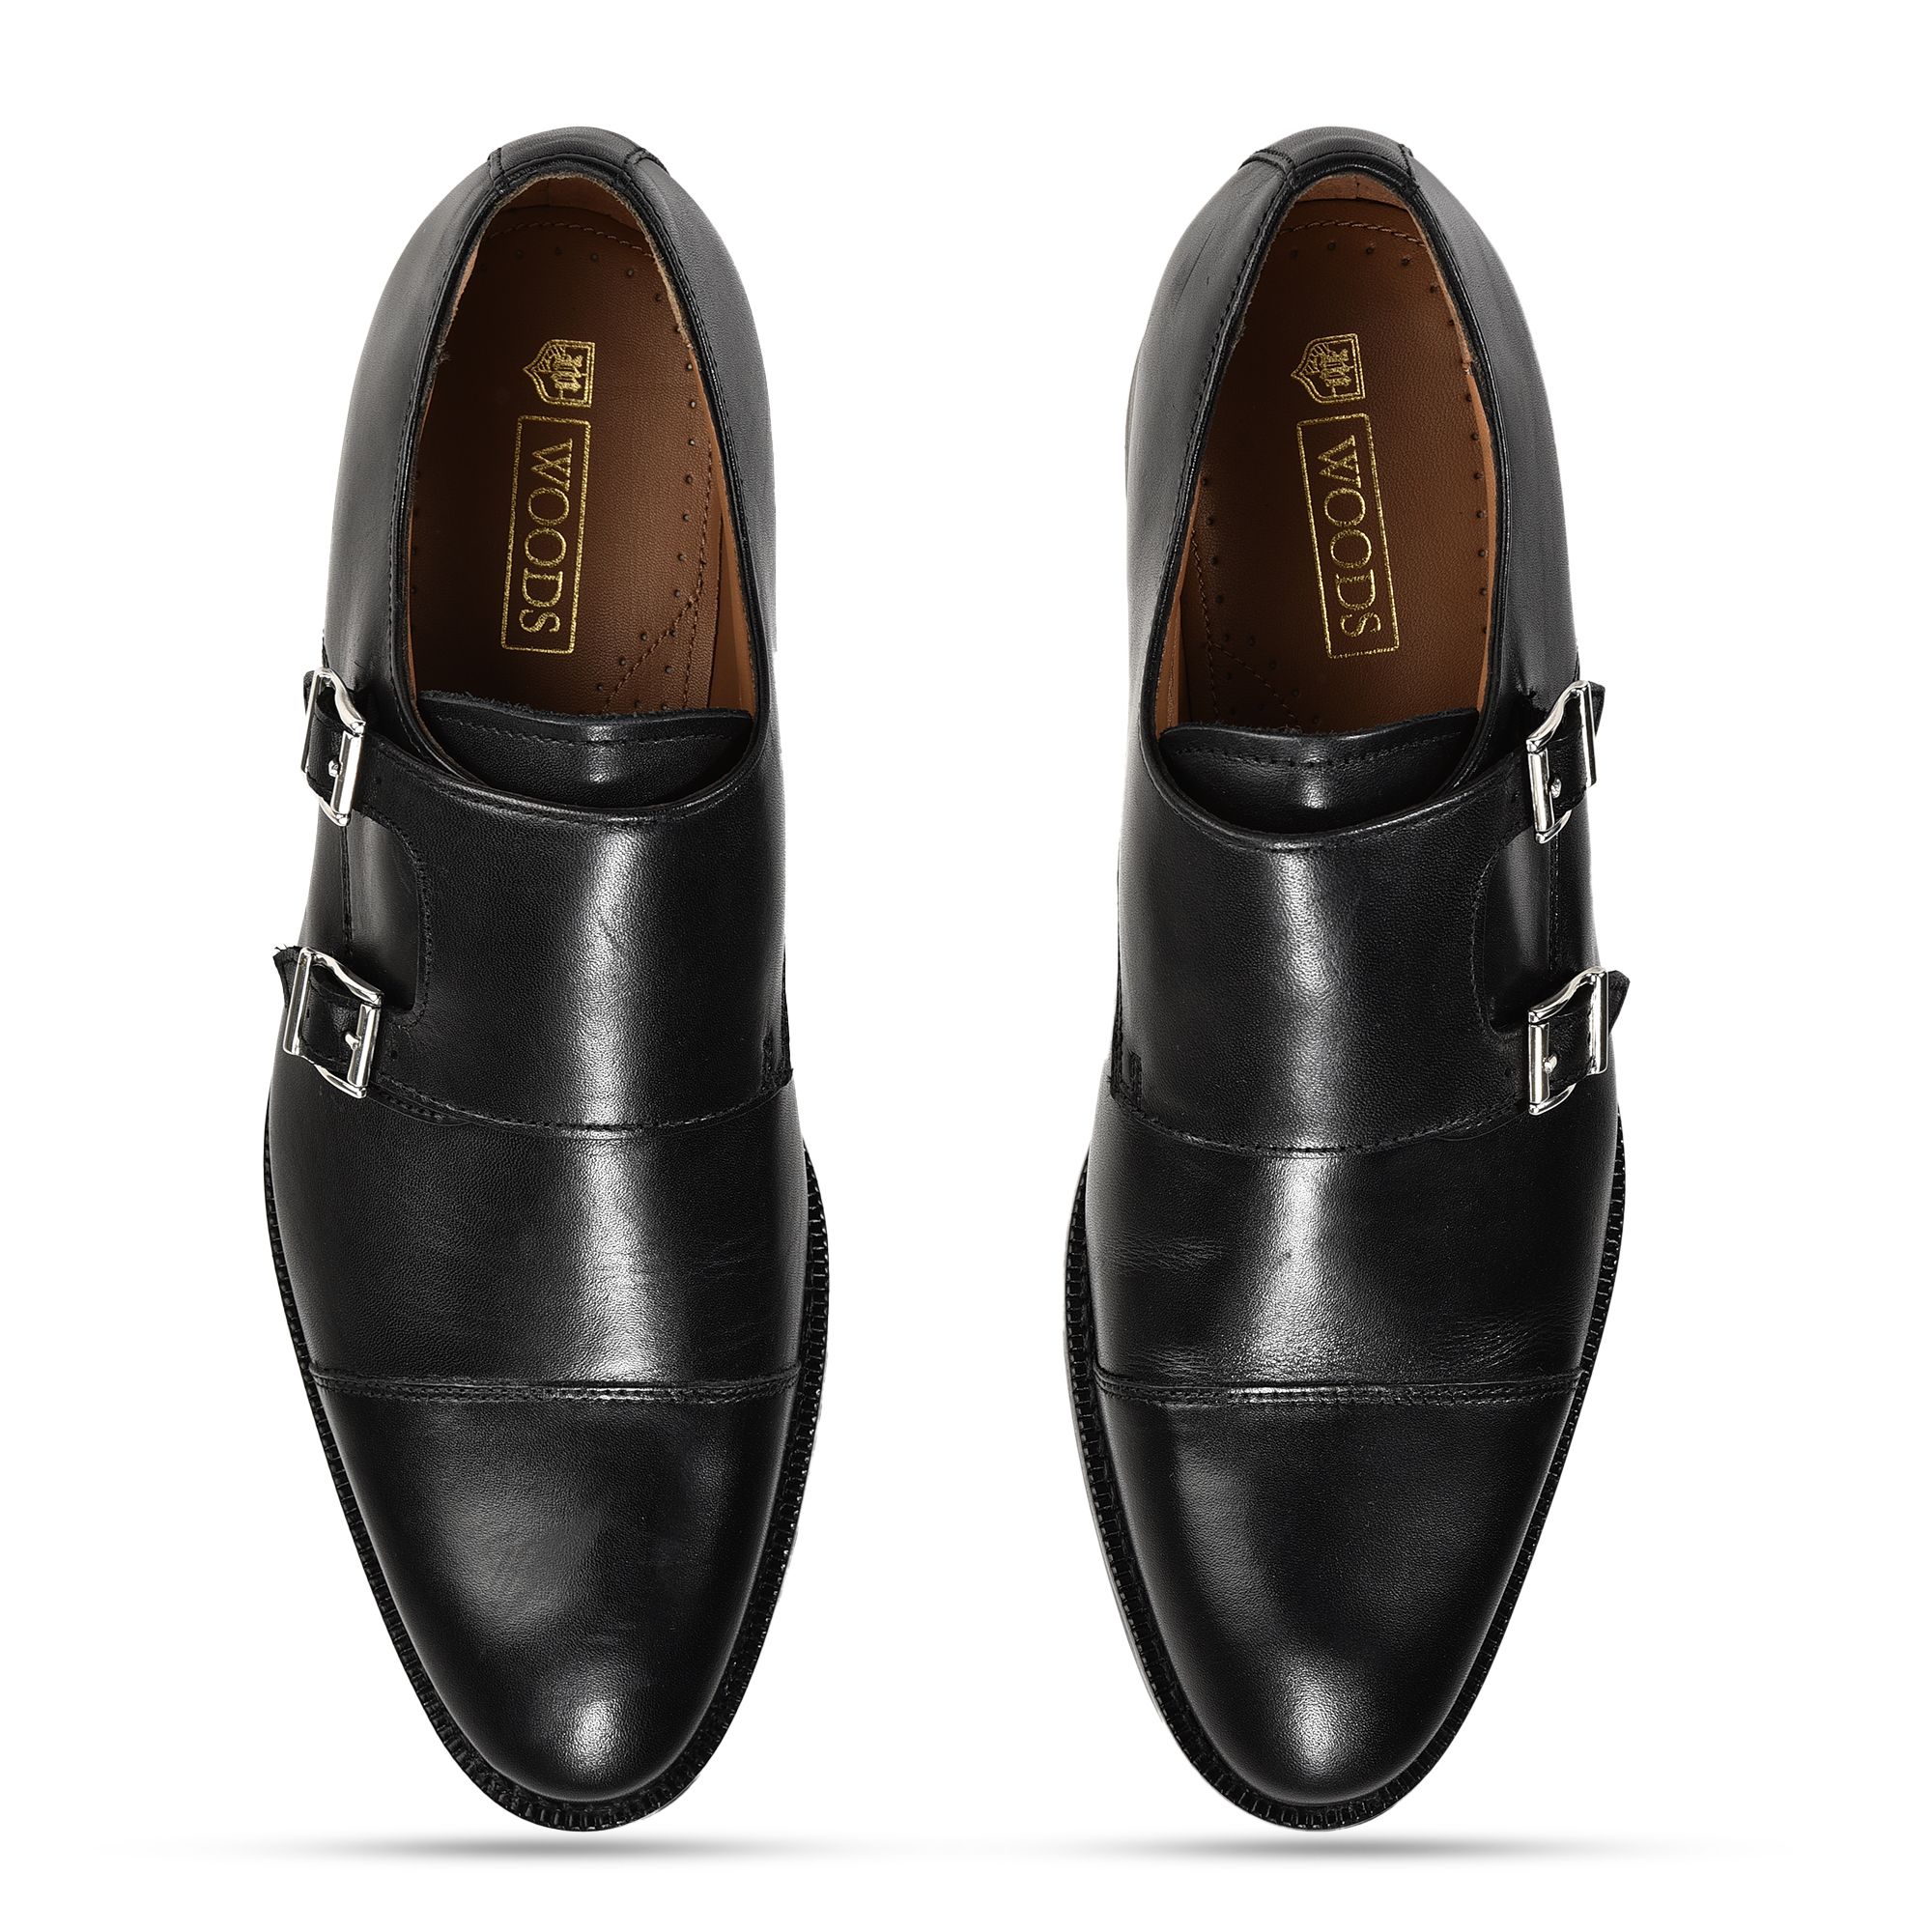 Black monk strap shoes for men